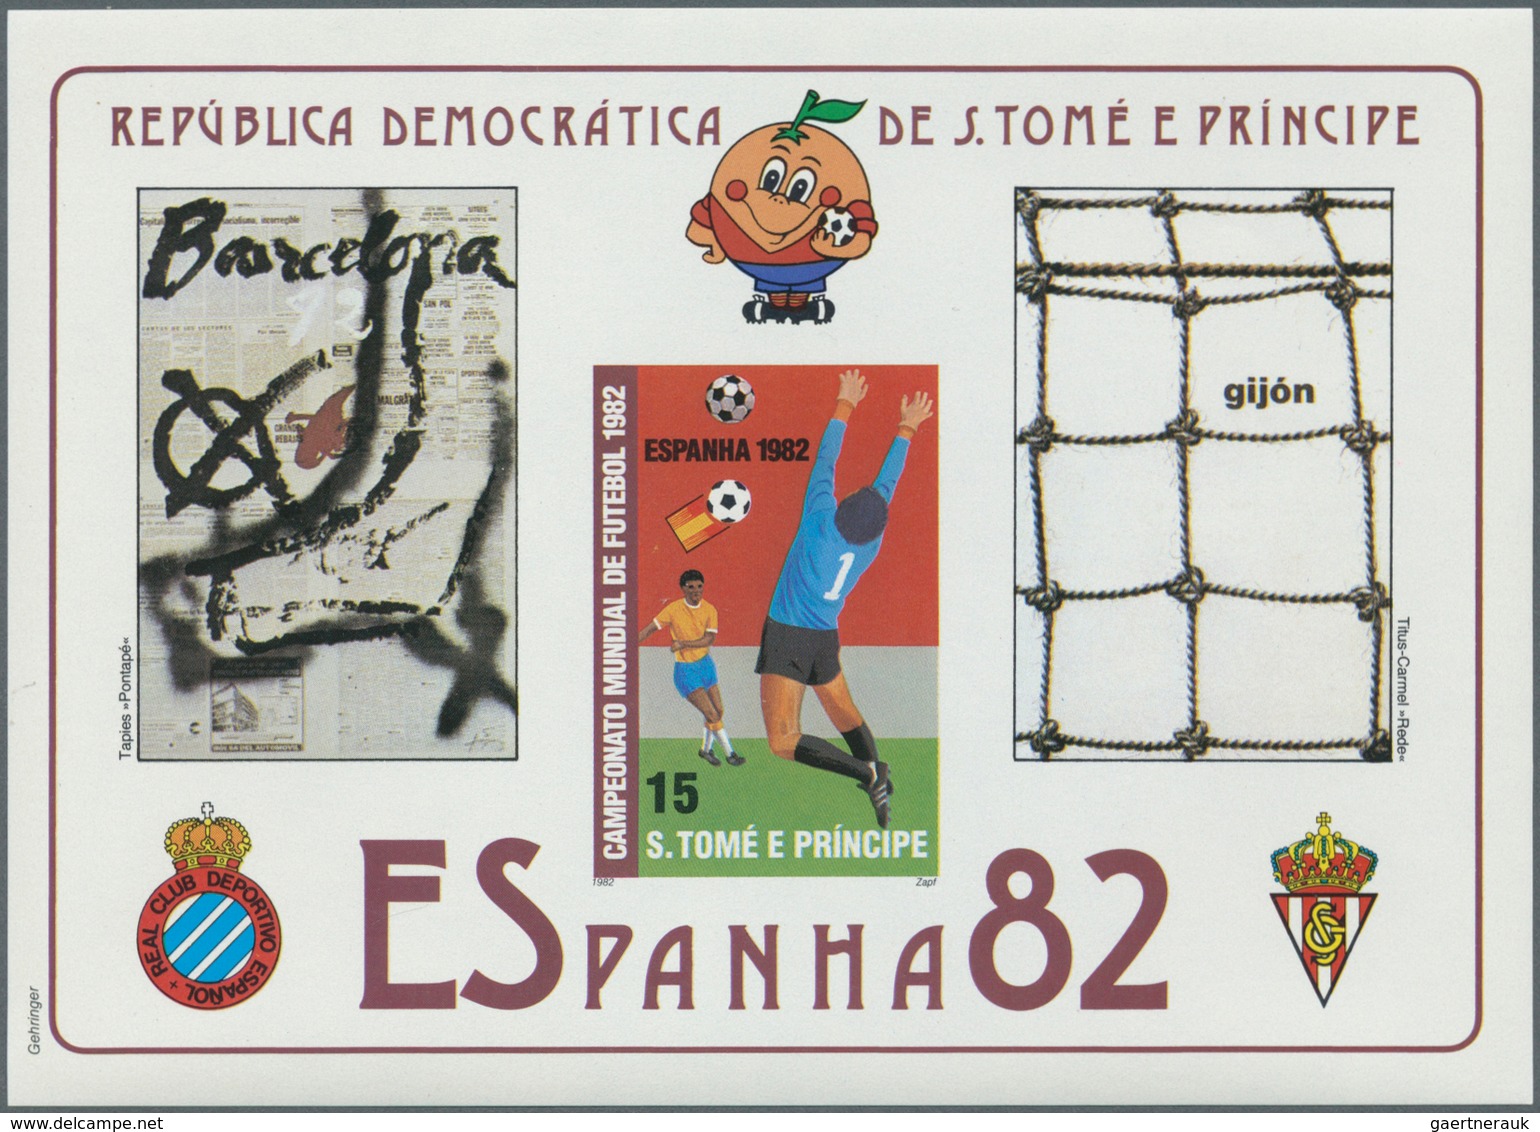 25607 Thematik: Sport-Fußball / sport-soccer, football: 1982, SAO TOME E PRINCIPE: Football World Champion